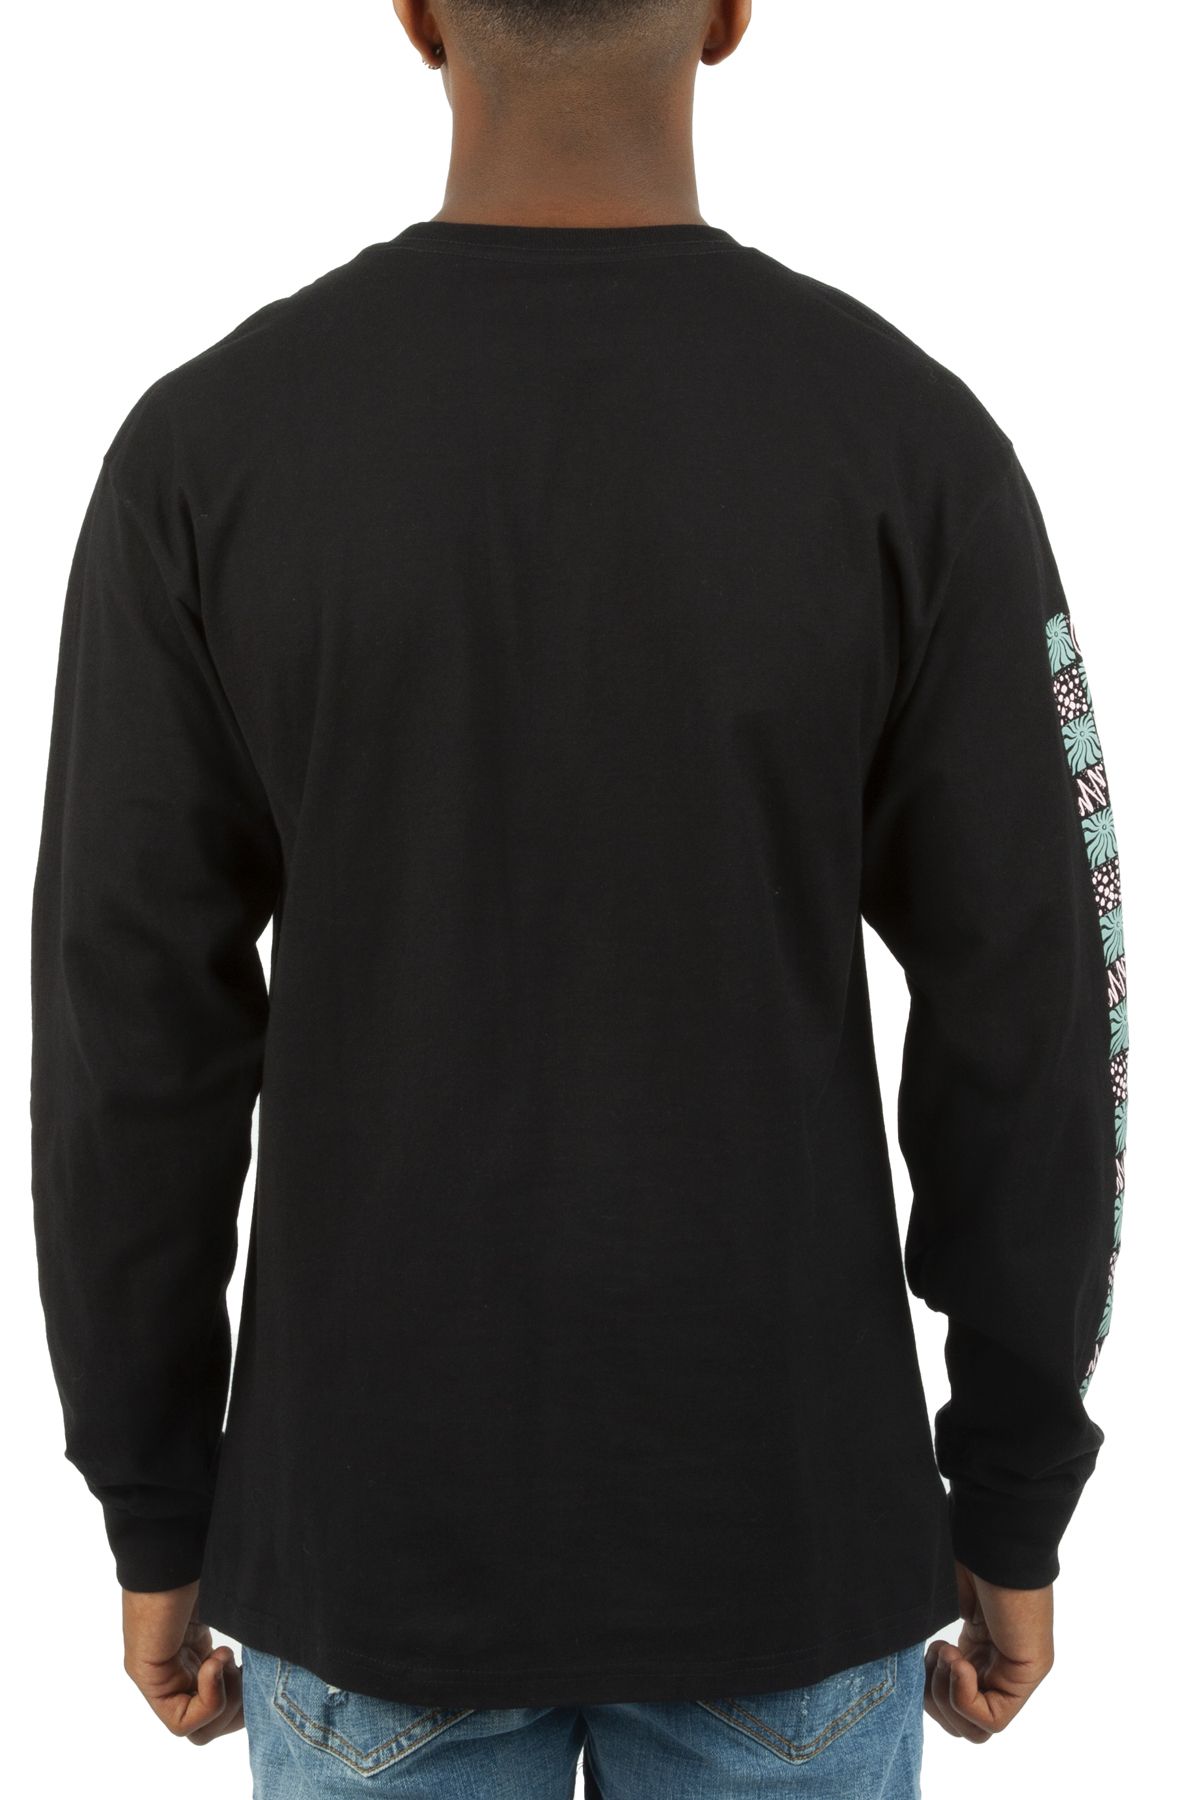 Vans Cellar back print long sleeve t-shirt in black, VN0A4PKSBLK1